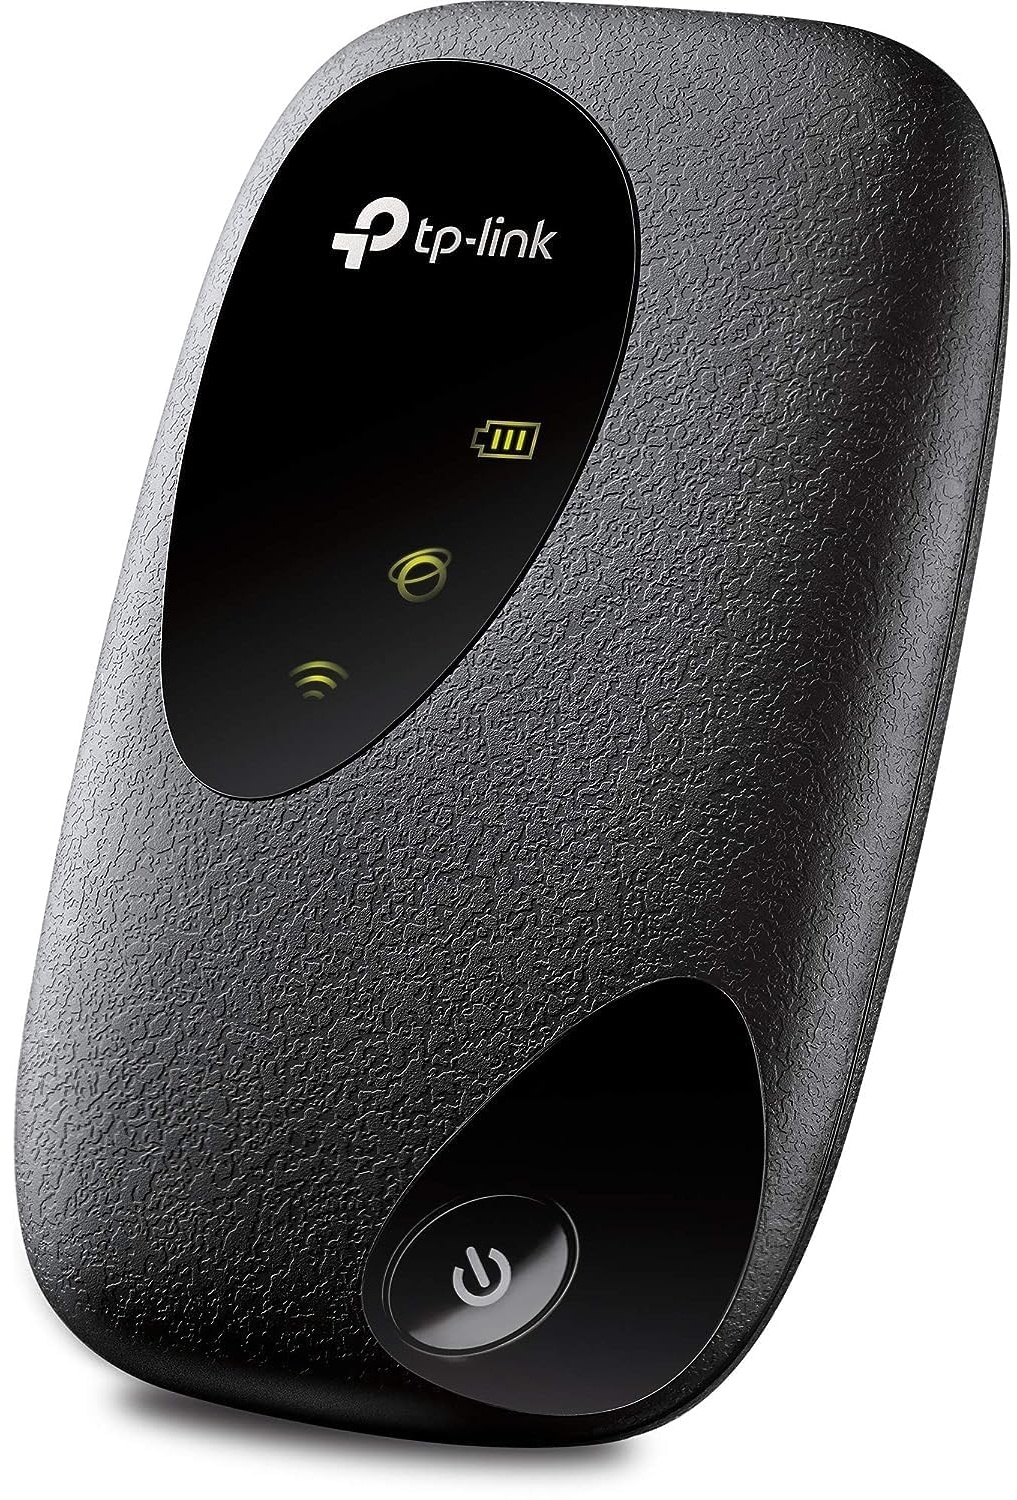 TP-Link M7200 mobiler WLAN Router (4G/LTE bis zu 150Mbit/s Download/ 50Mbit/s Upload, Hotspot, 2000mAh Akku, kompatibel mit allen europäischen SIM Karten)